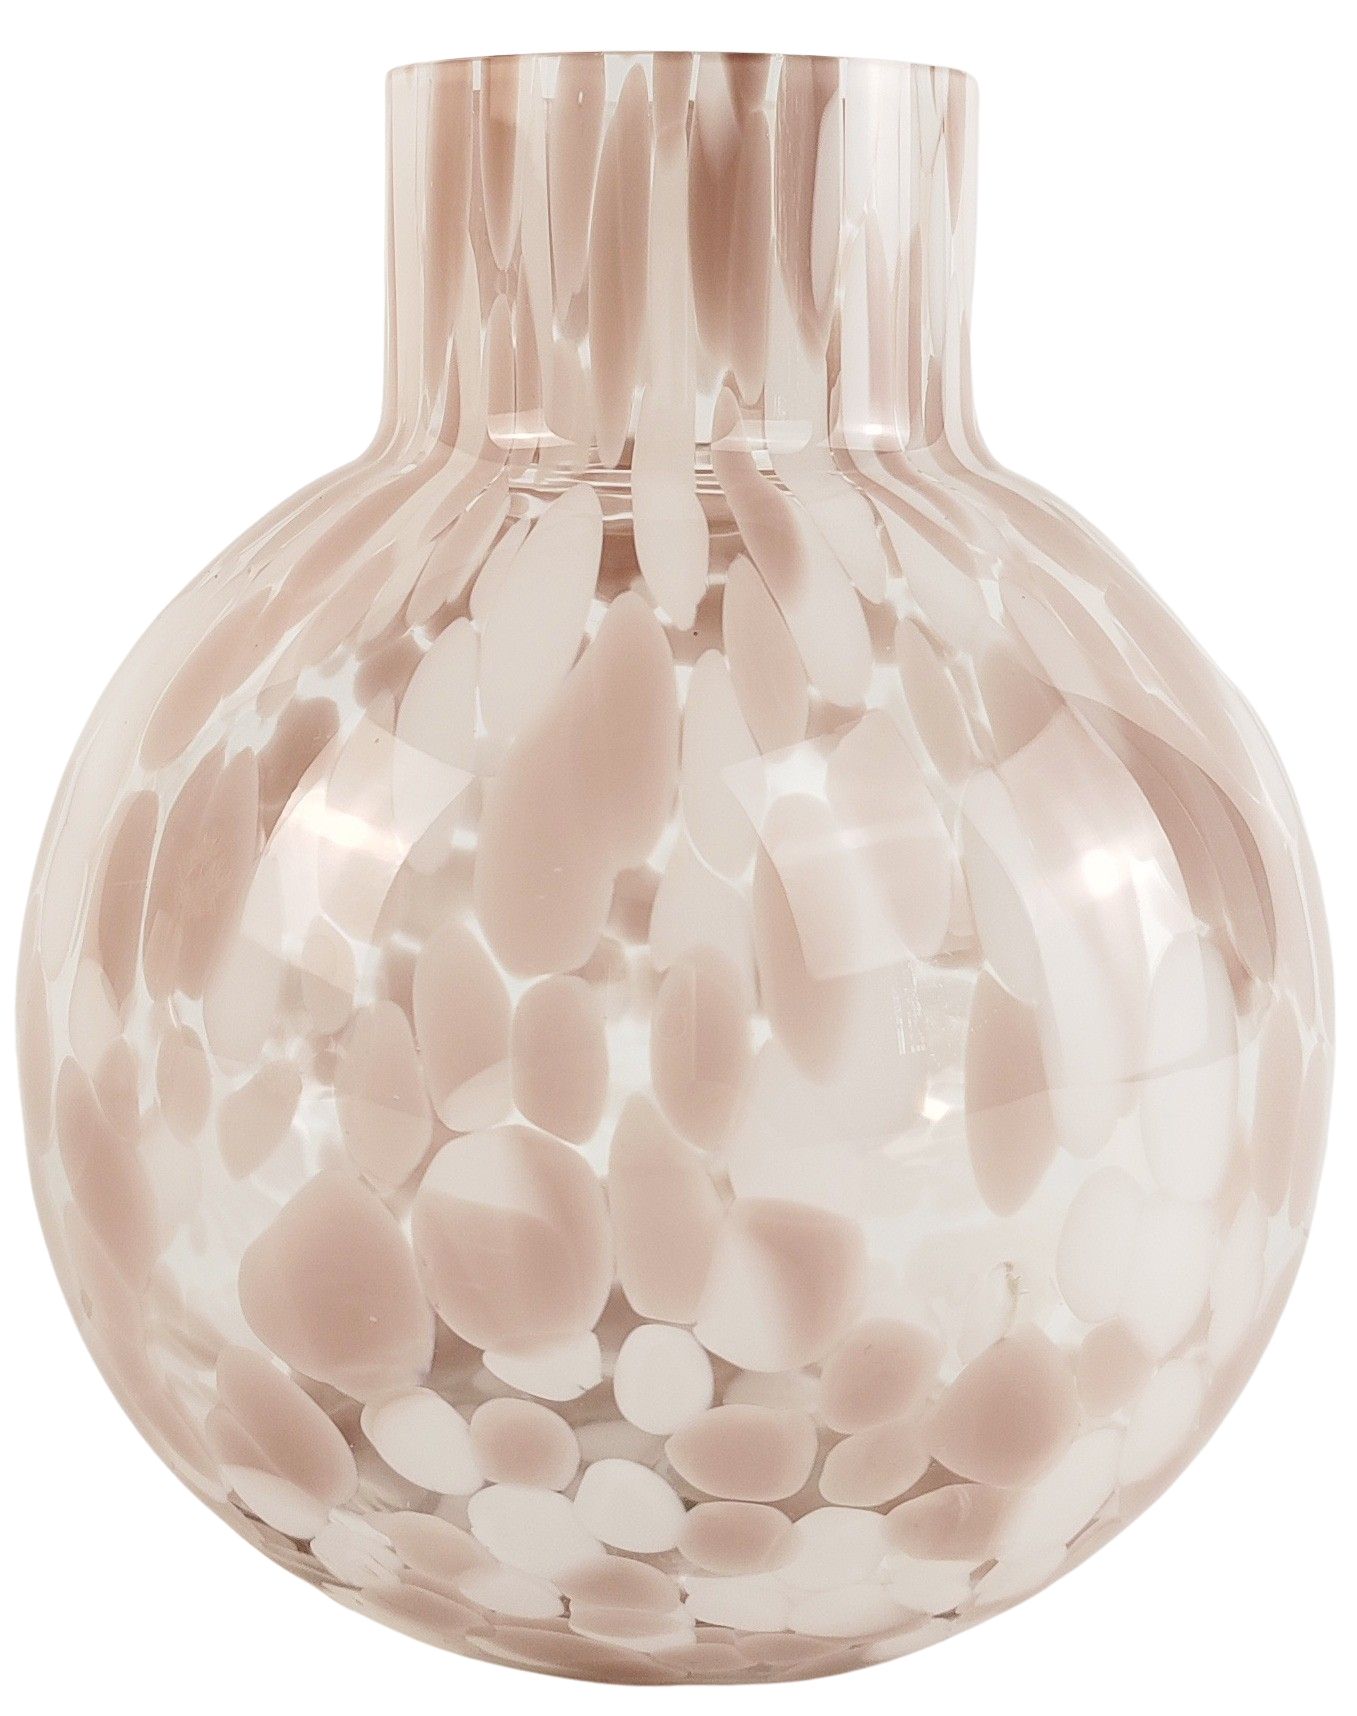 Jaslyn Speckle Glass Vase | White & Lilac